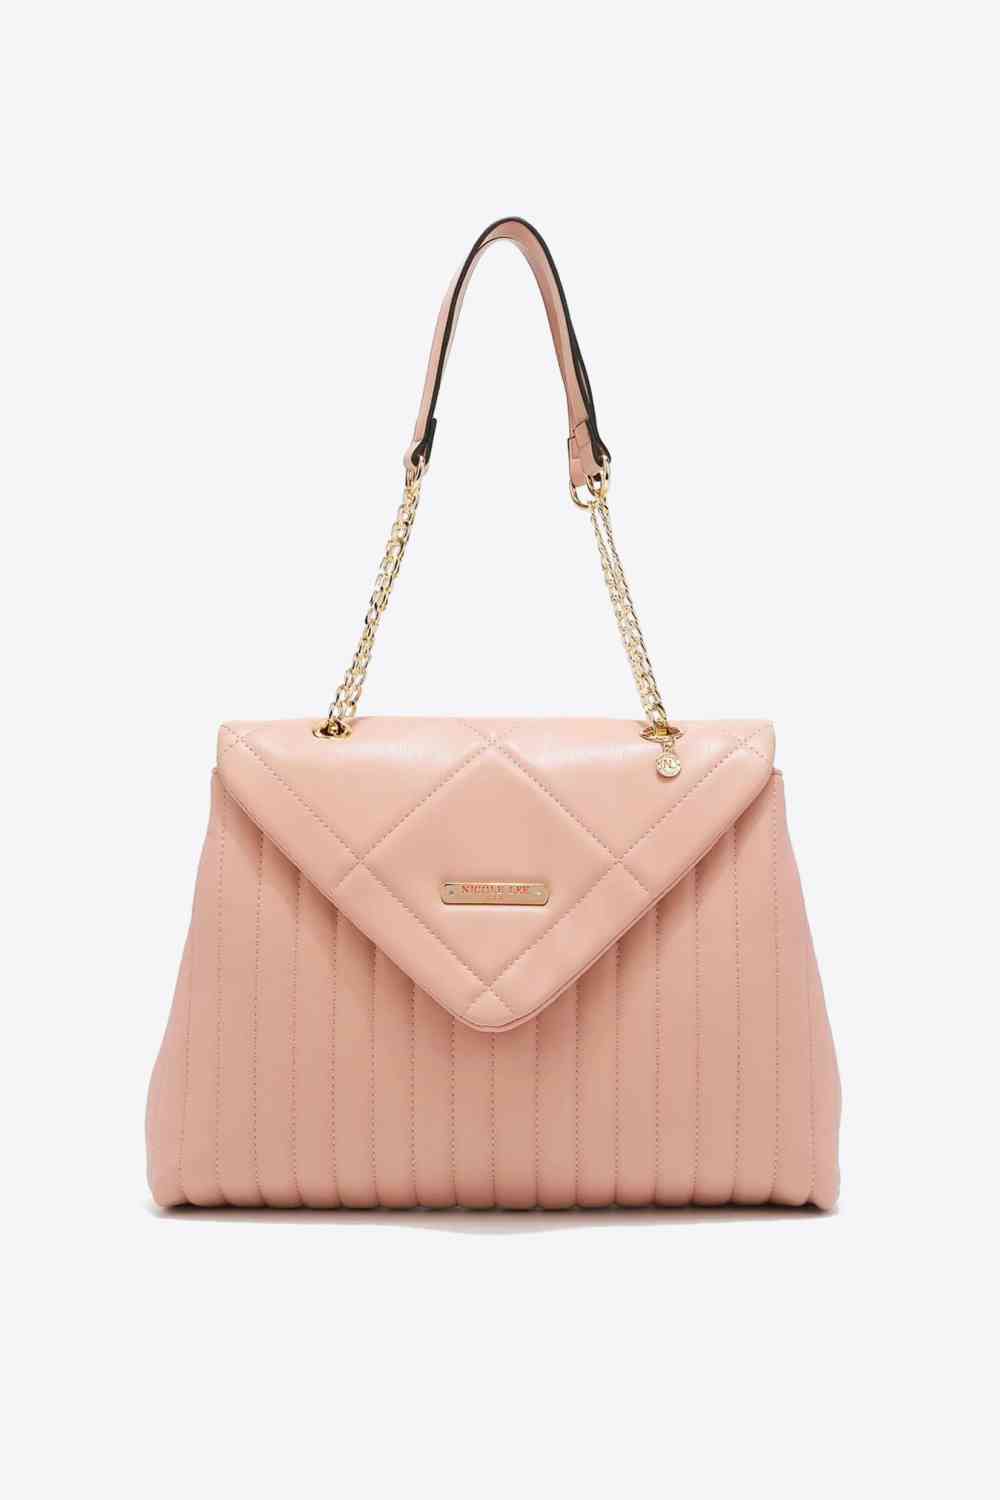 Nicole Lee USA A Nice Touch Handbag Dusty Pink One Size